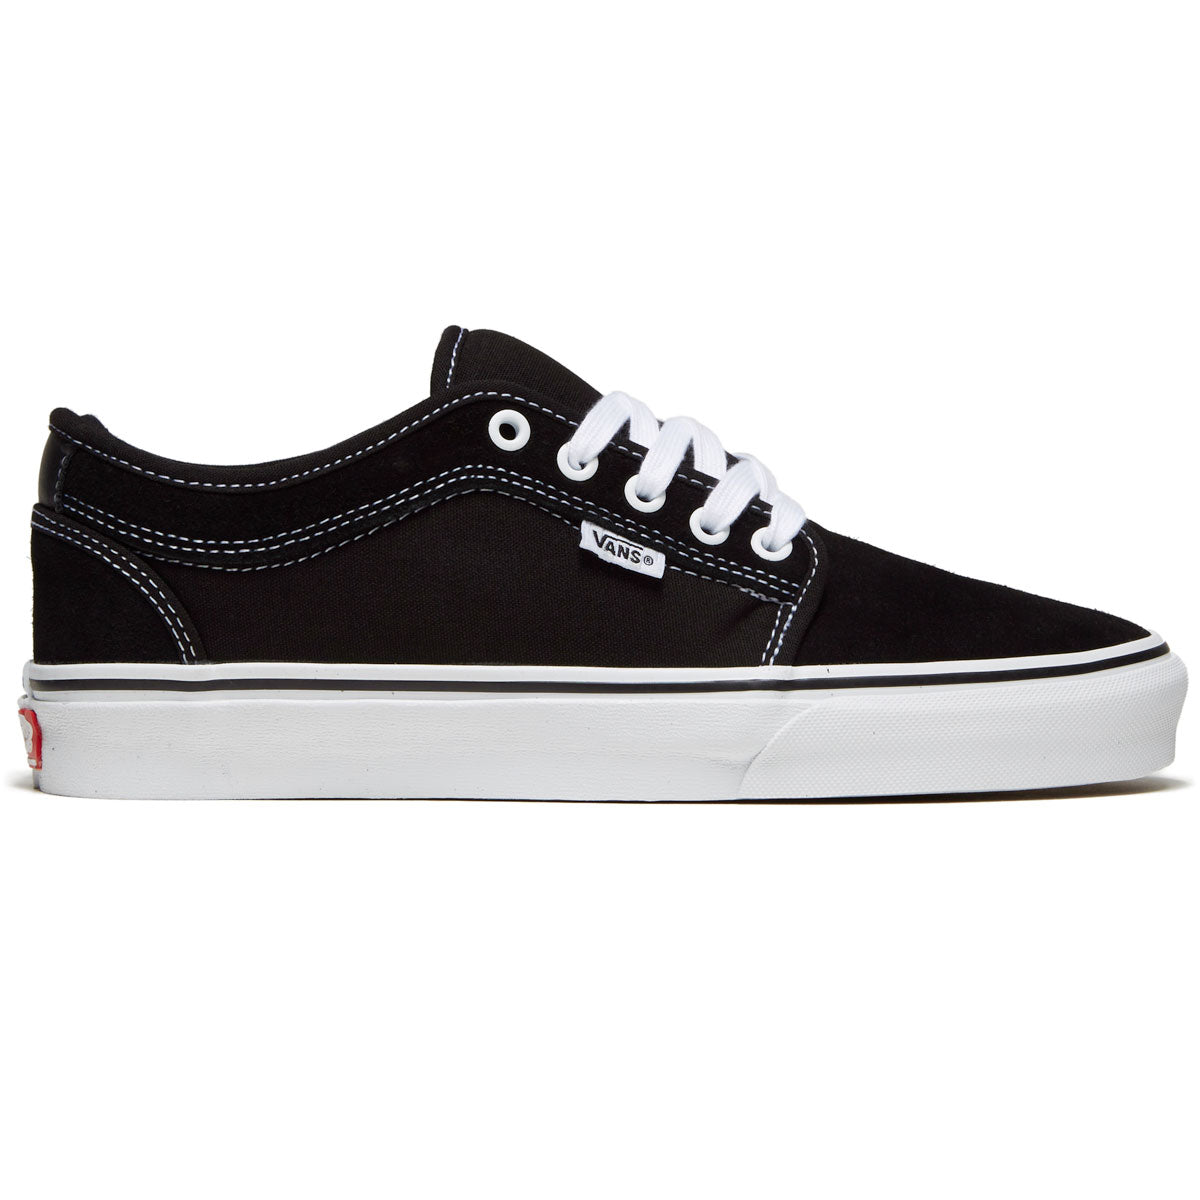 Vans Skate Chukka Low Shoes - Black/White image 1